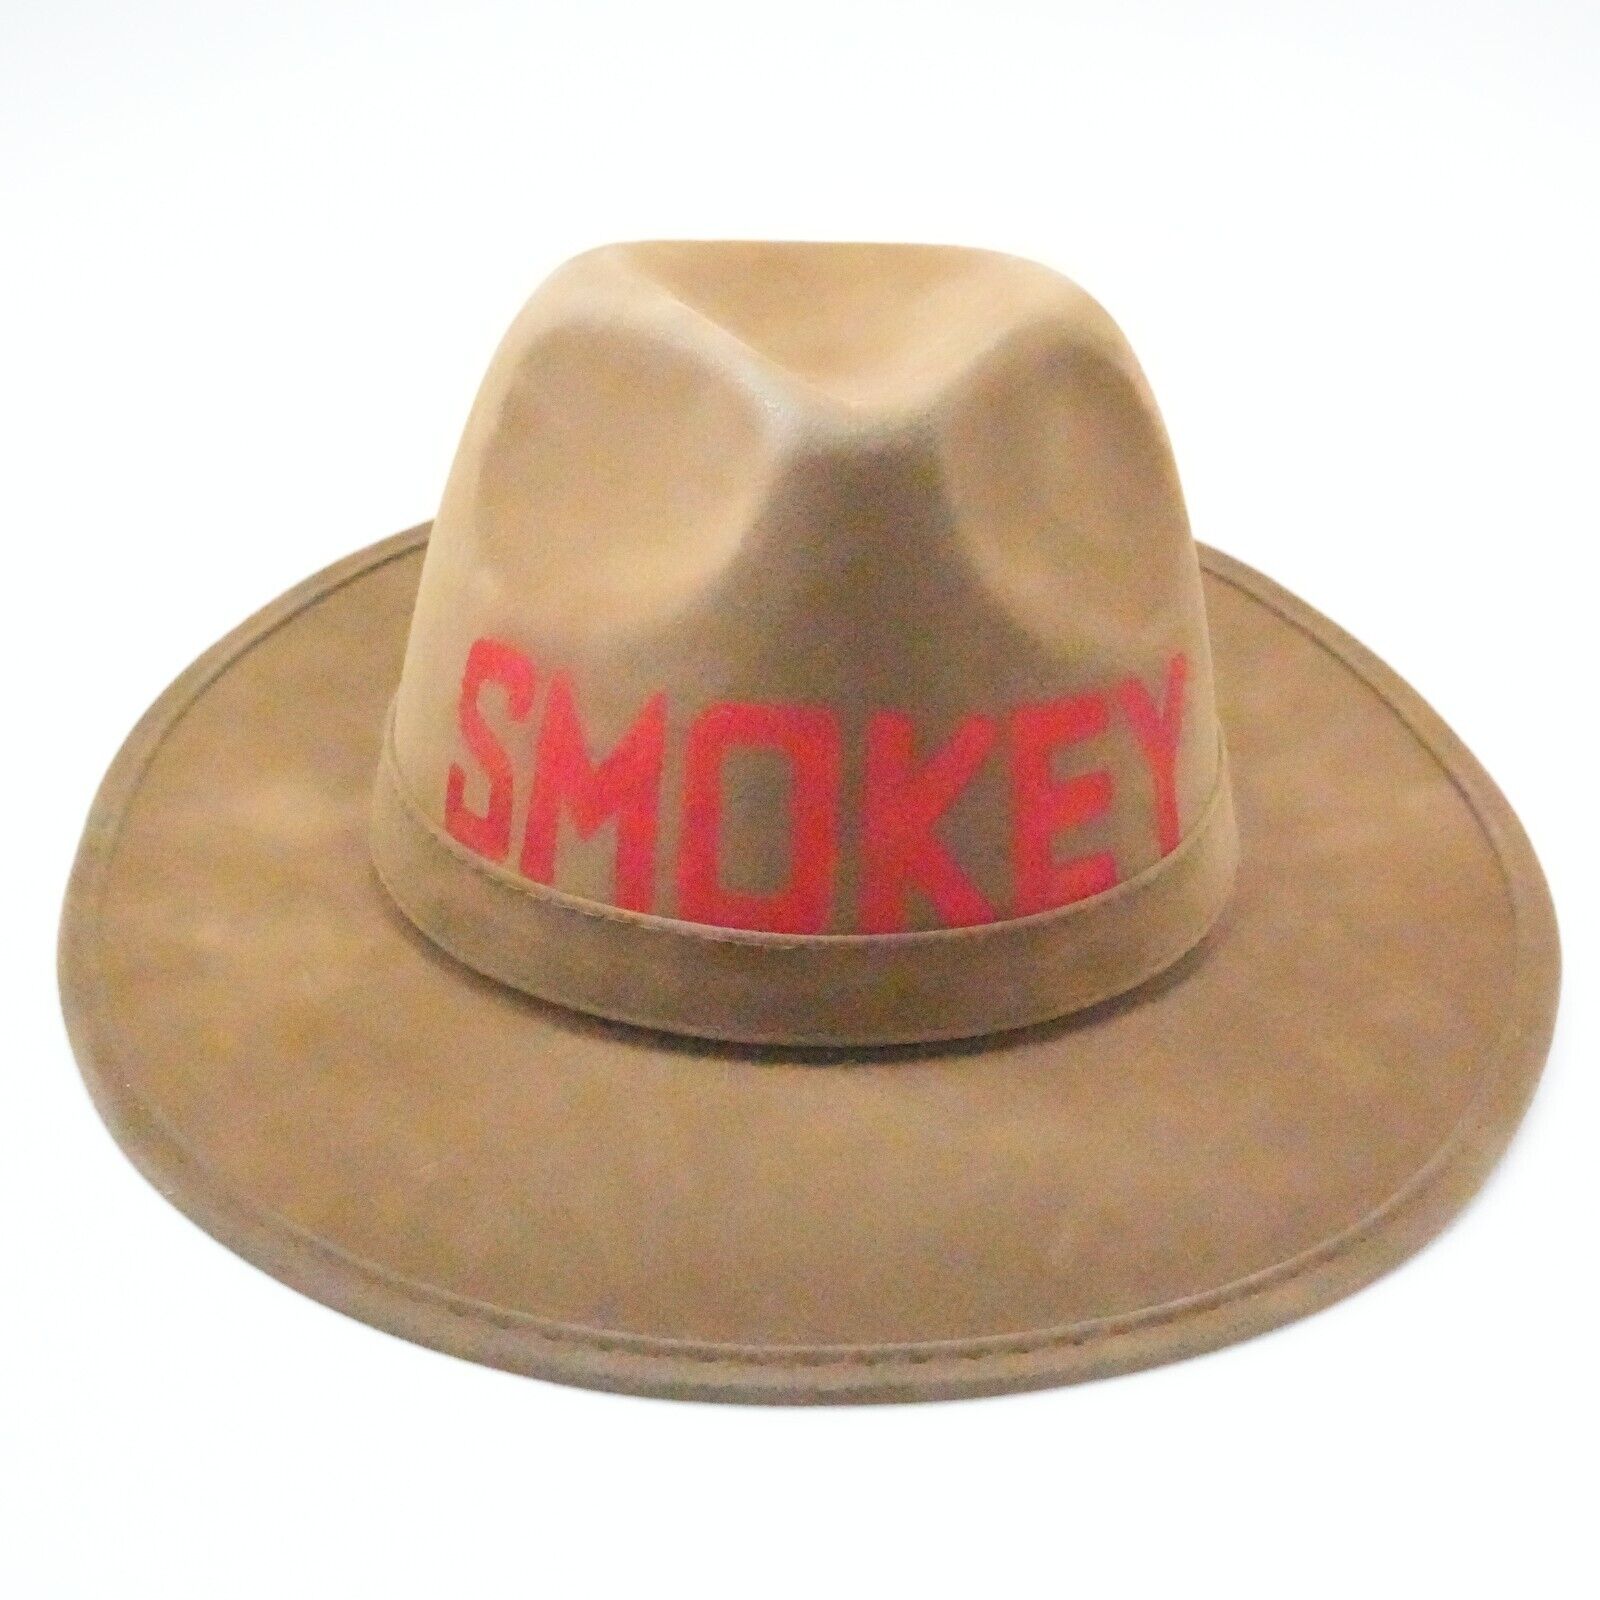 Vintage Smokey The Bear Child's Souvenir Wool Felt Ranger Hat, All Original